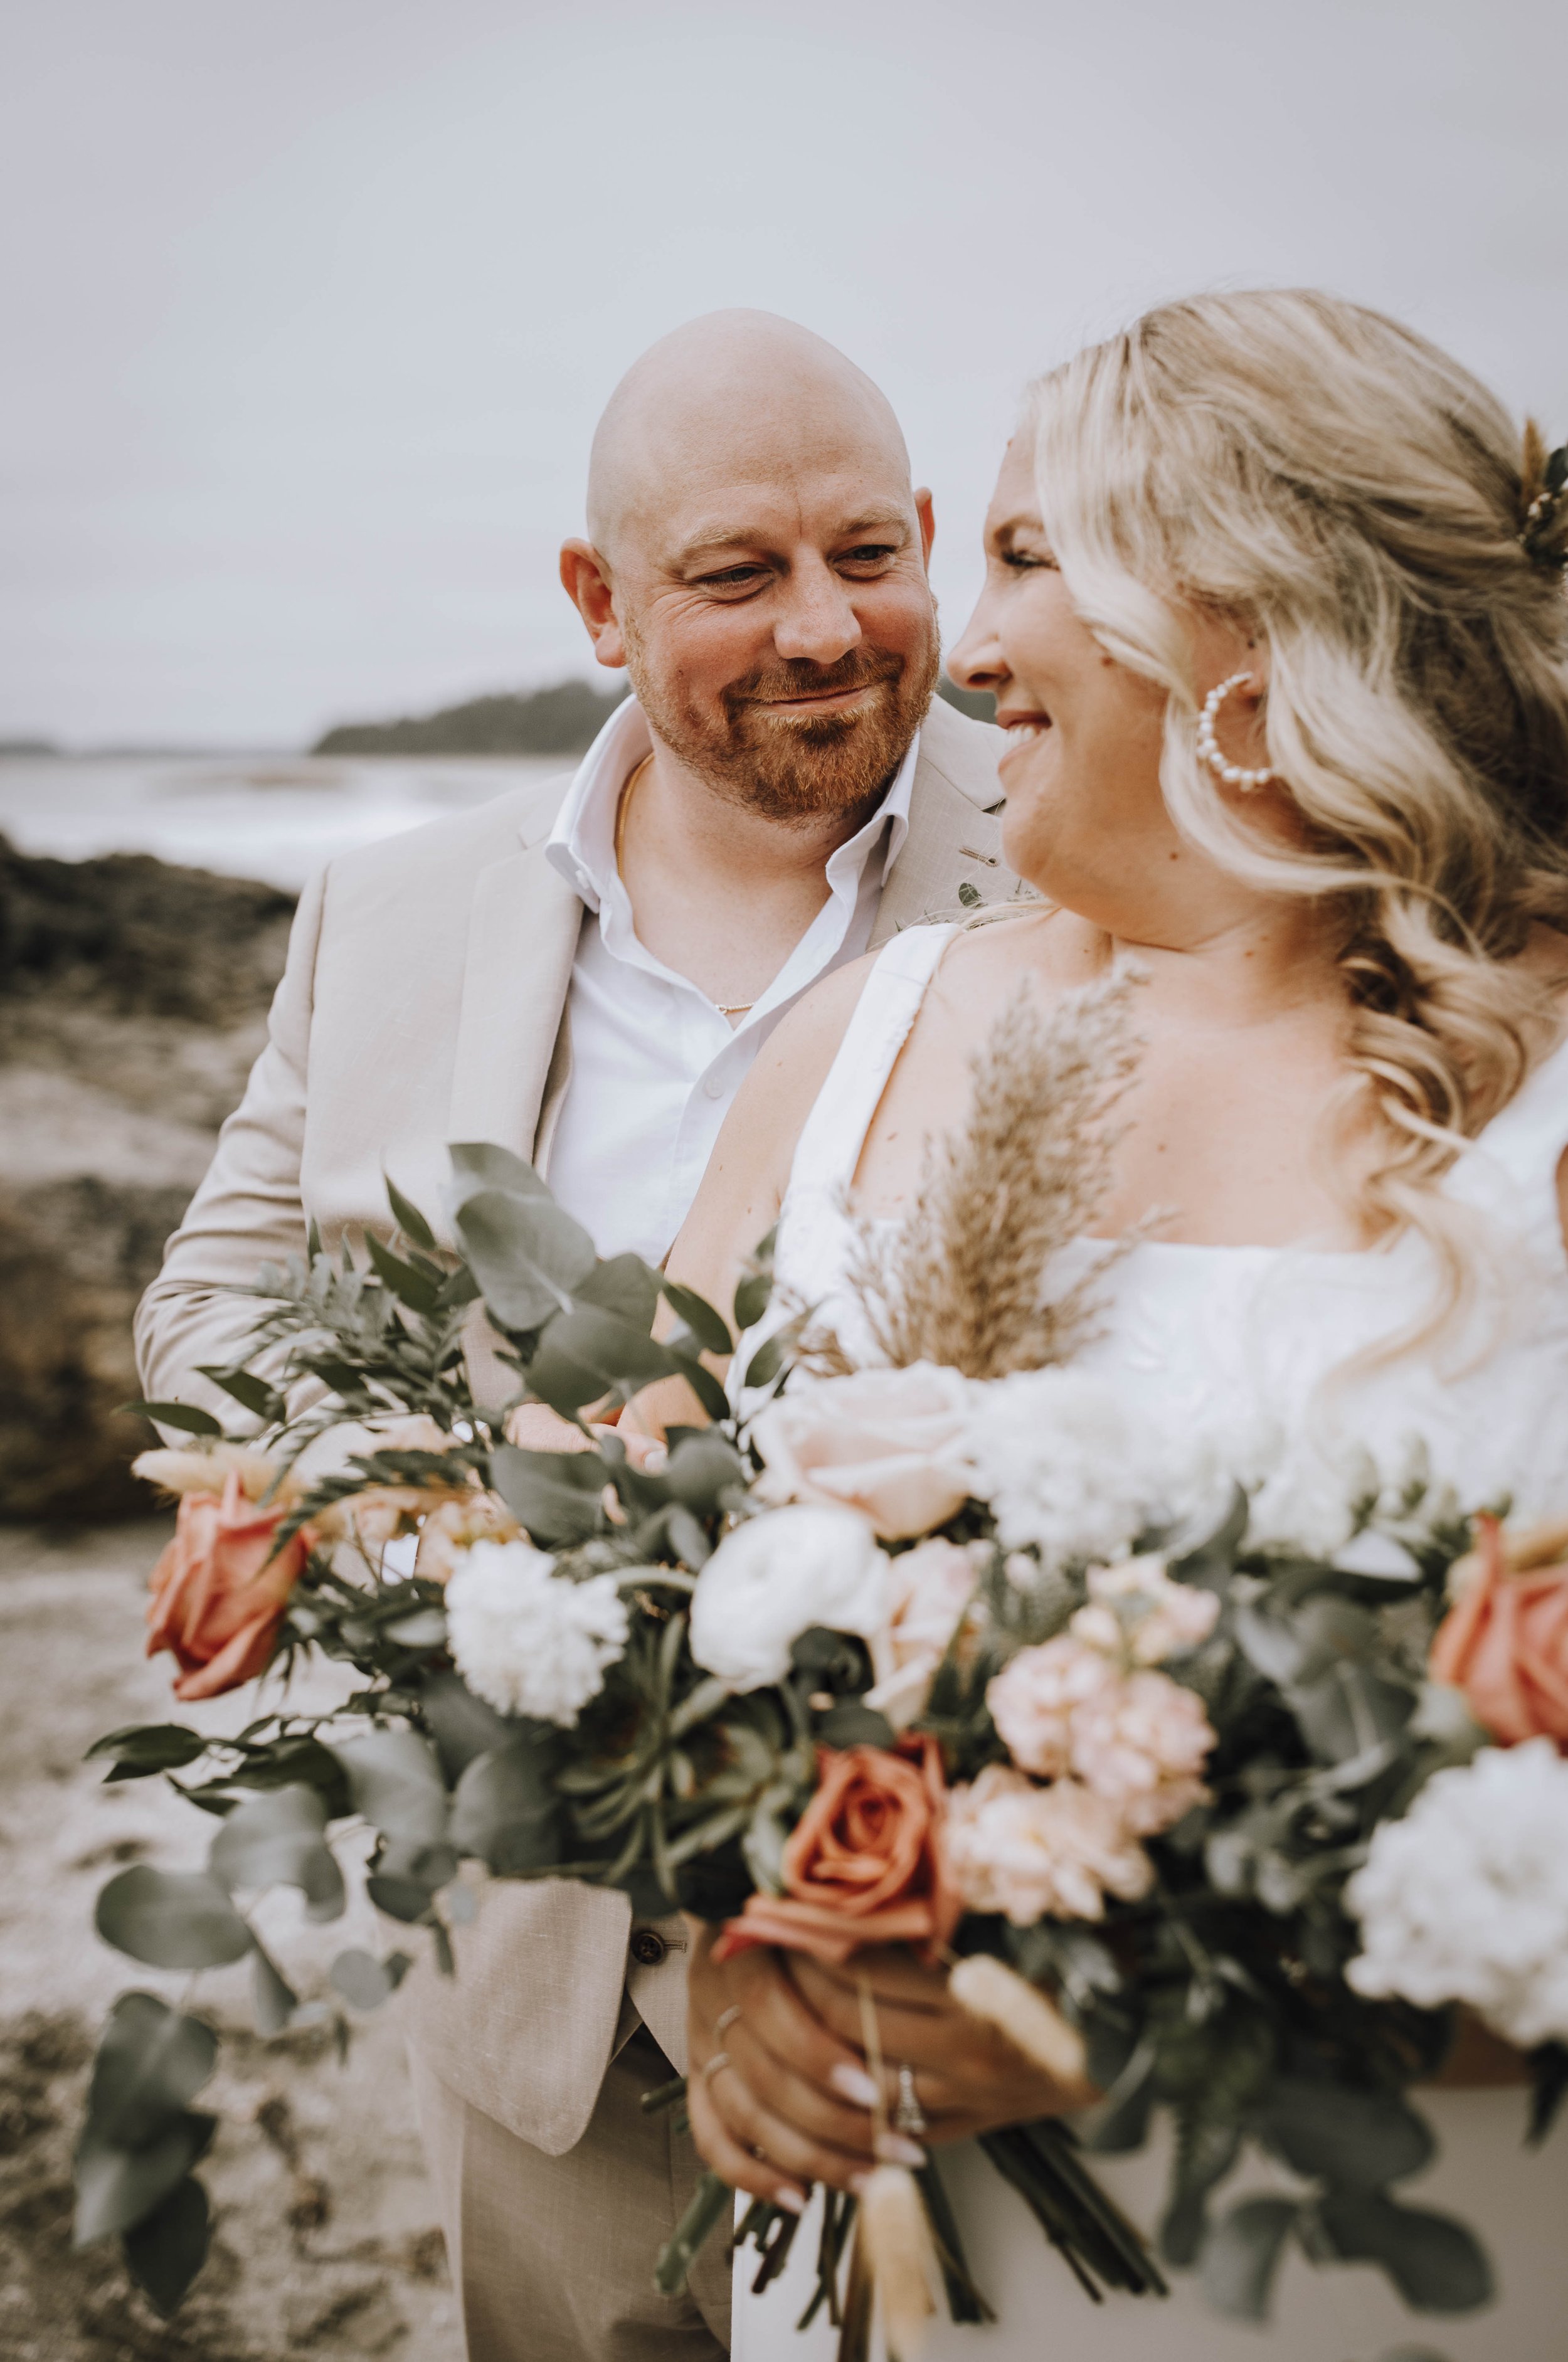 Jamie and Brad wedding - Tofino Vancouver Island British Columbia - Elyse Anna Photography-3373.jpg